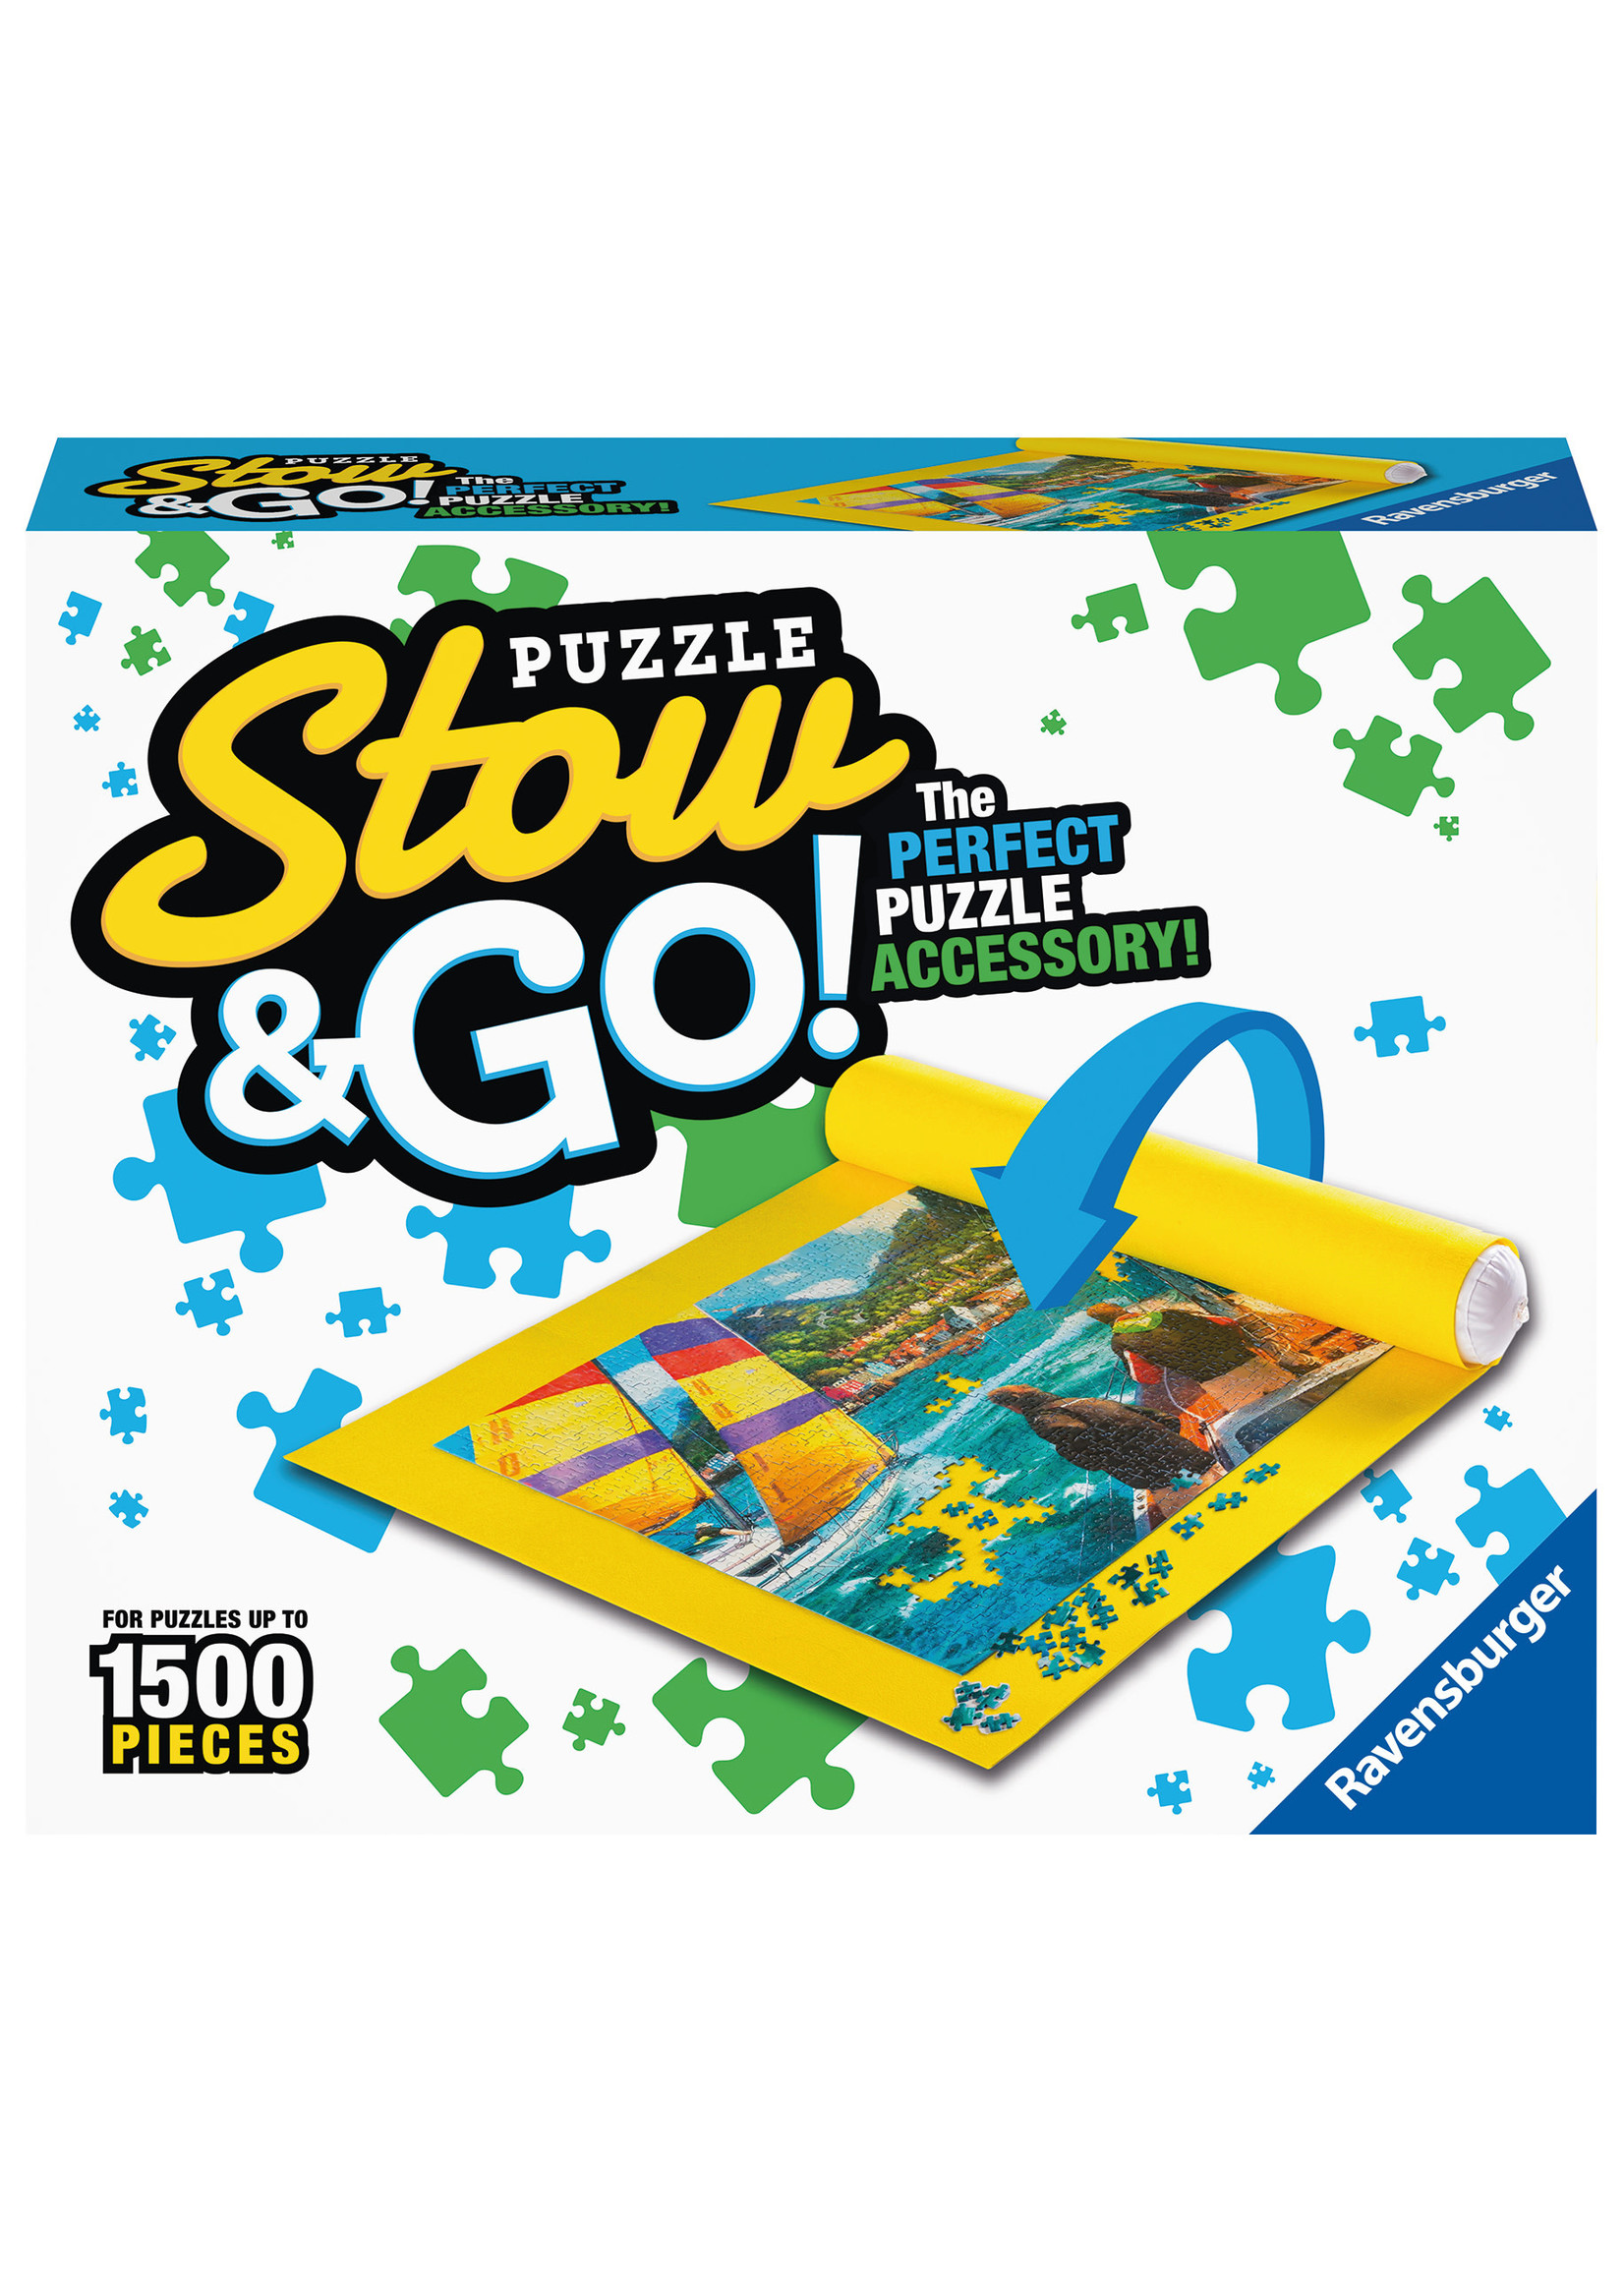 Puzzle Stow & Go!